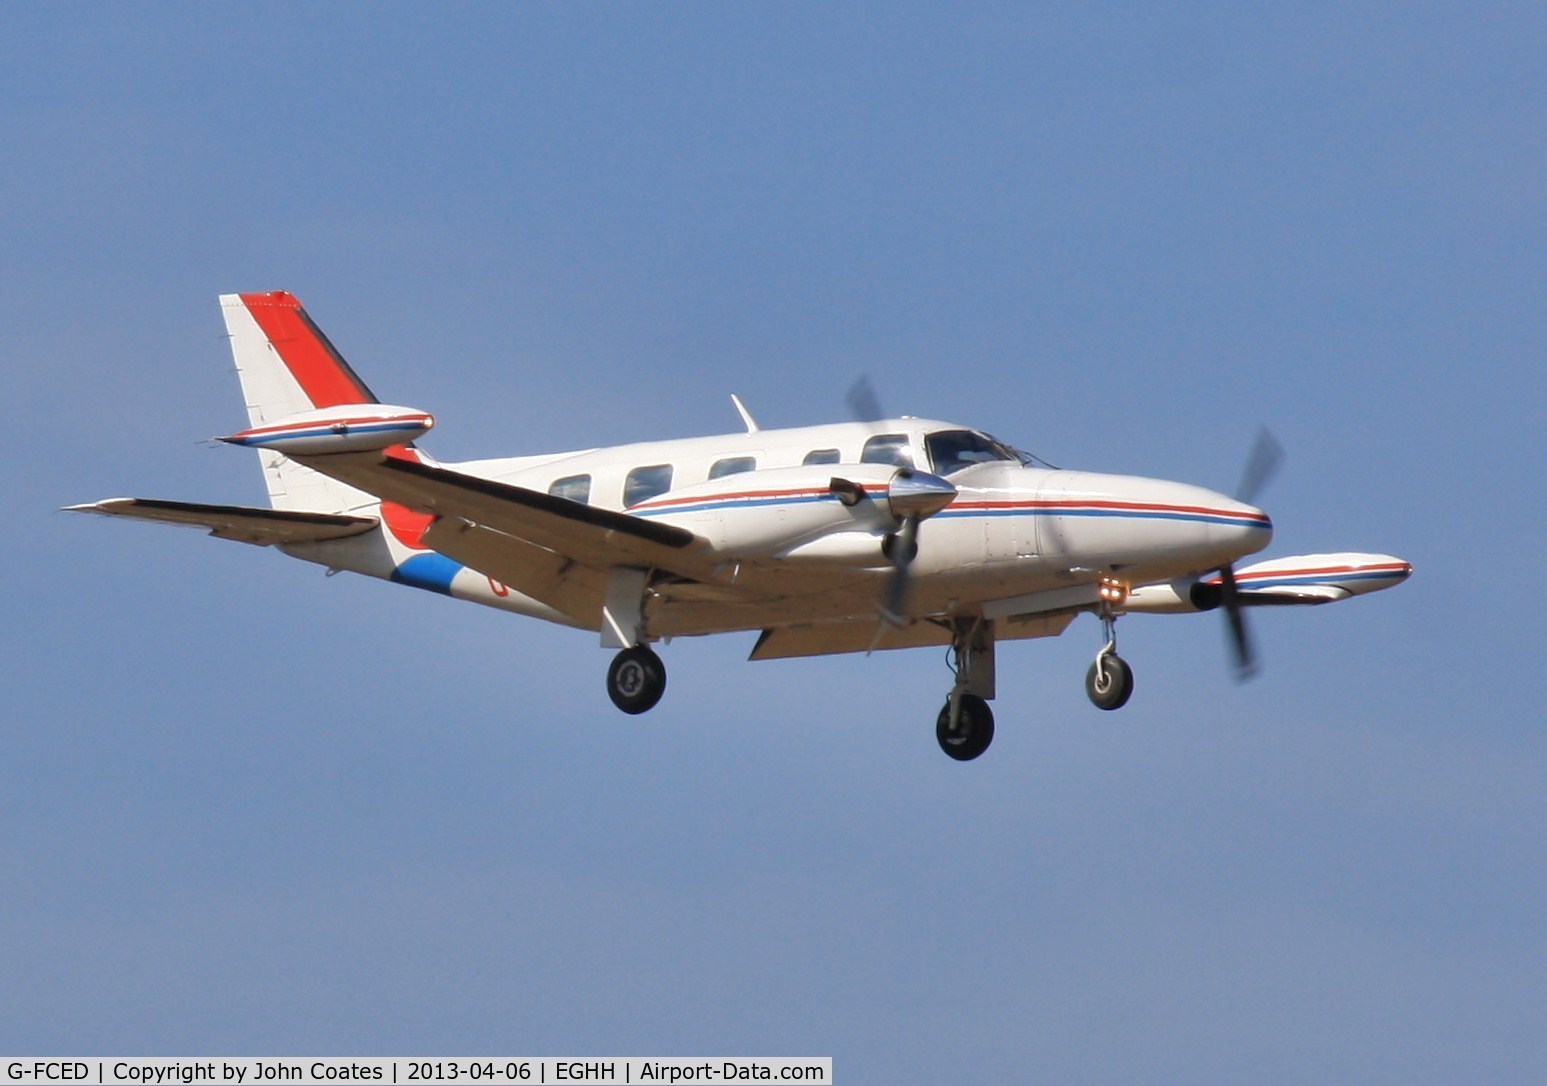 G-FCED, 1981 Piper PA-31T2-620 Cheyenne IIXL C/N 31T-8166013, Arriving runway 08